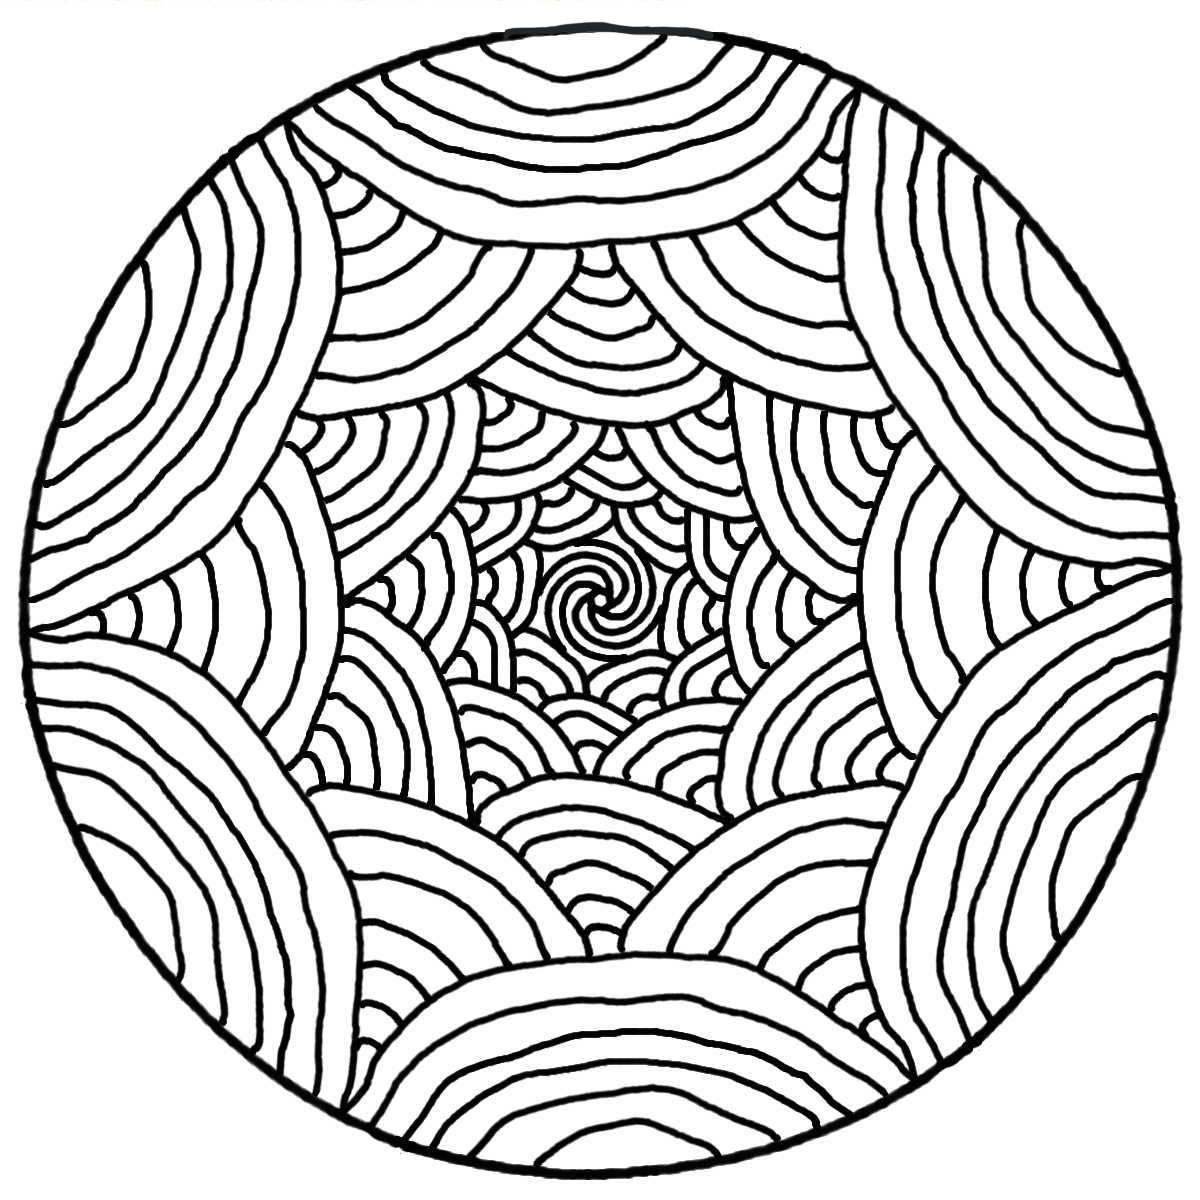 Coloriage Illusion D optique Mandala illusion d'optique - Mandalas Zen & Anti-stress